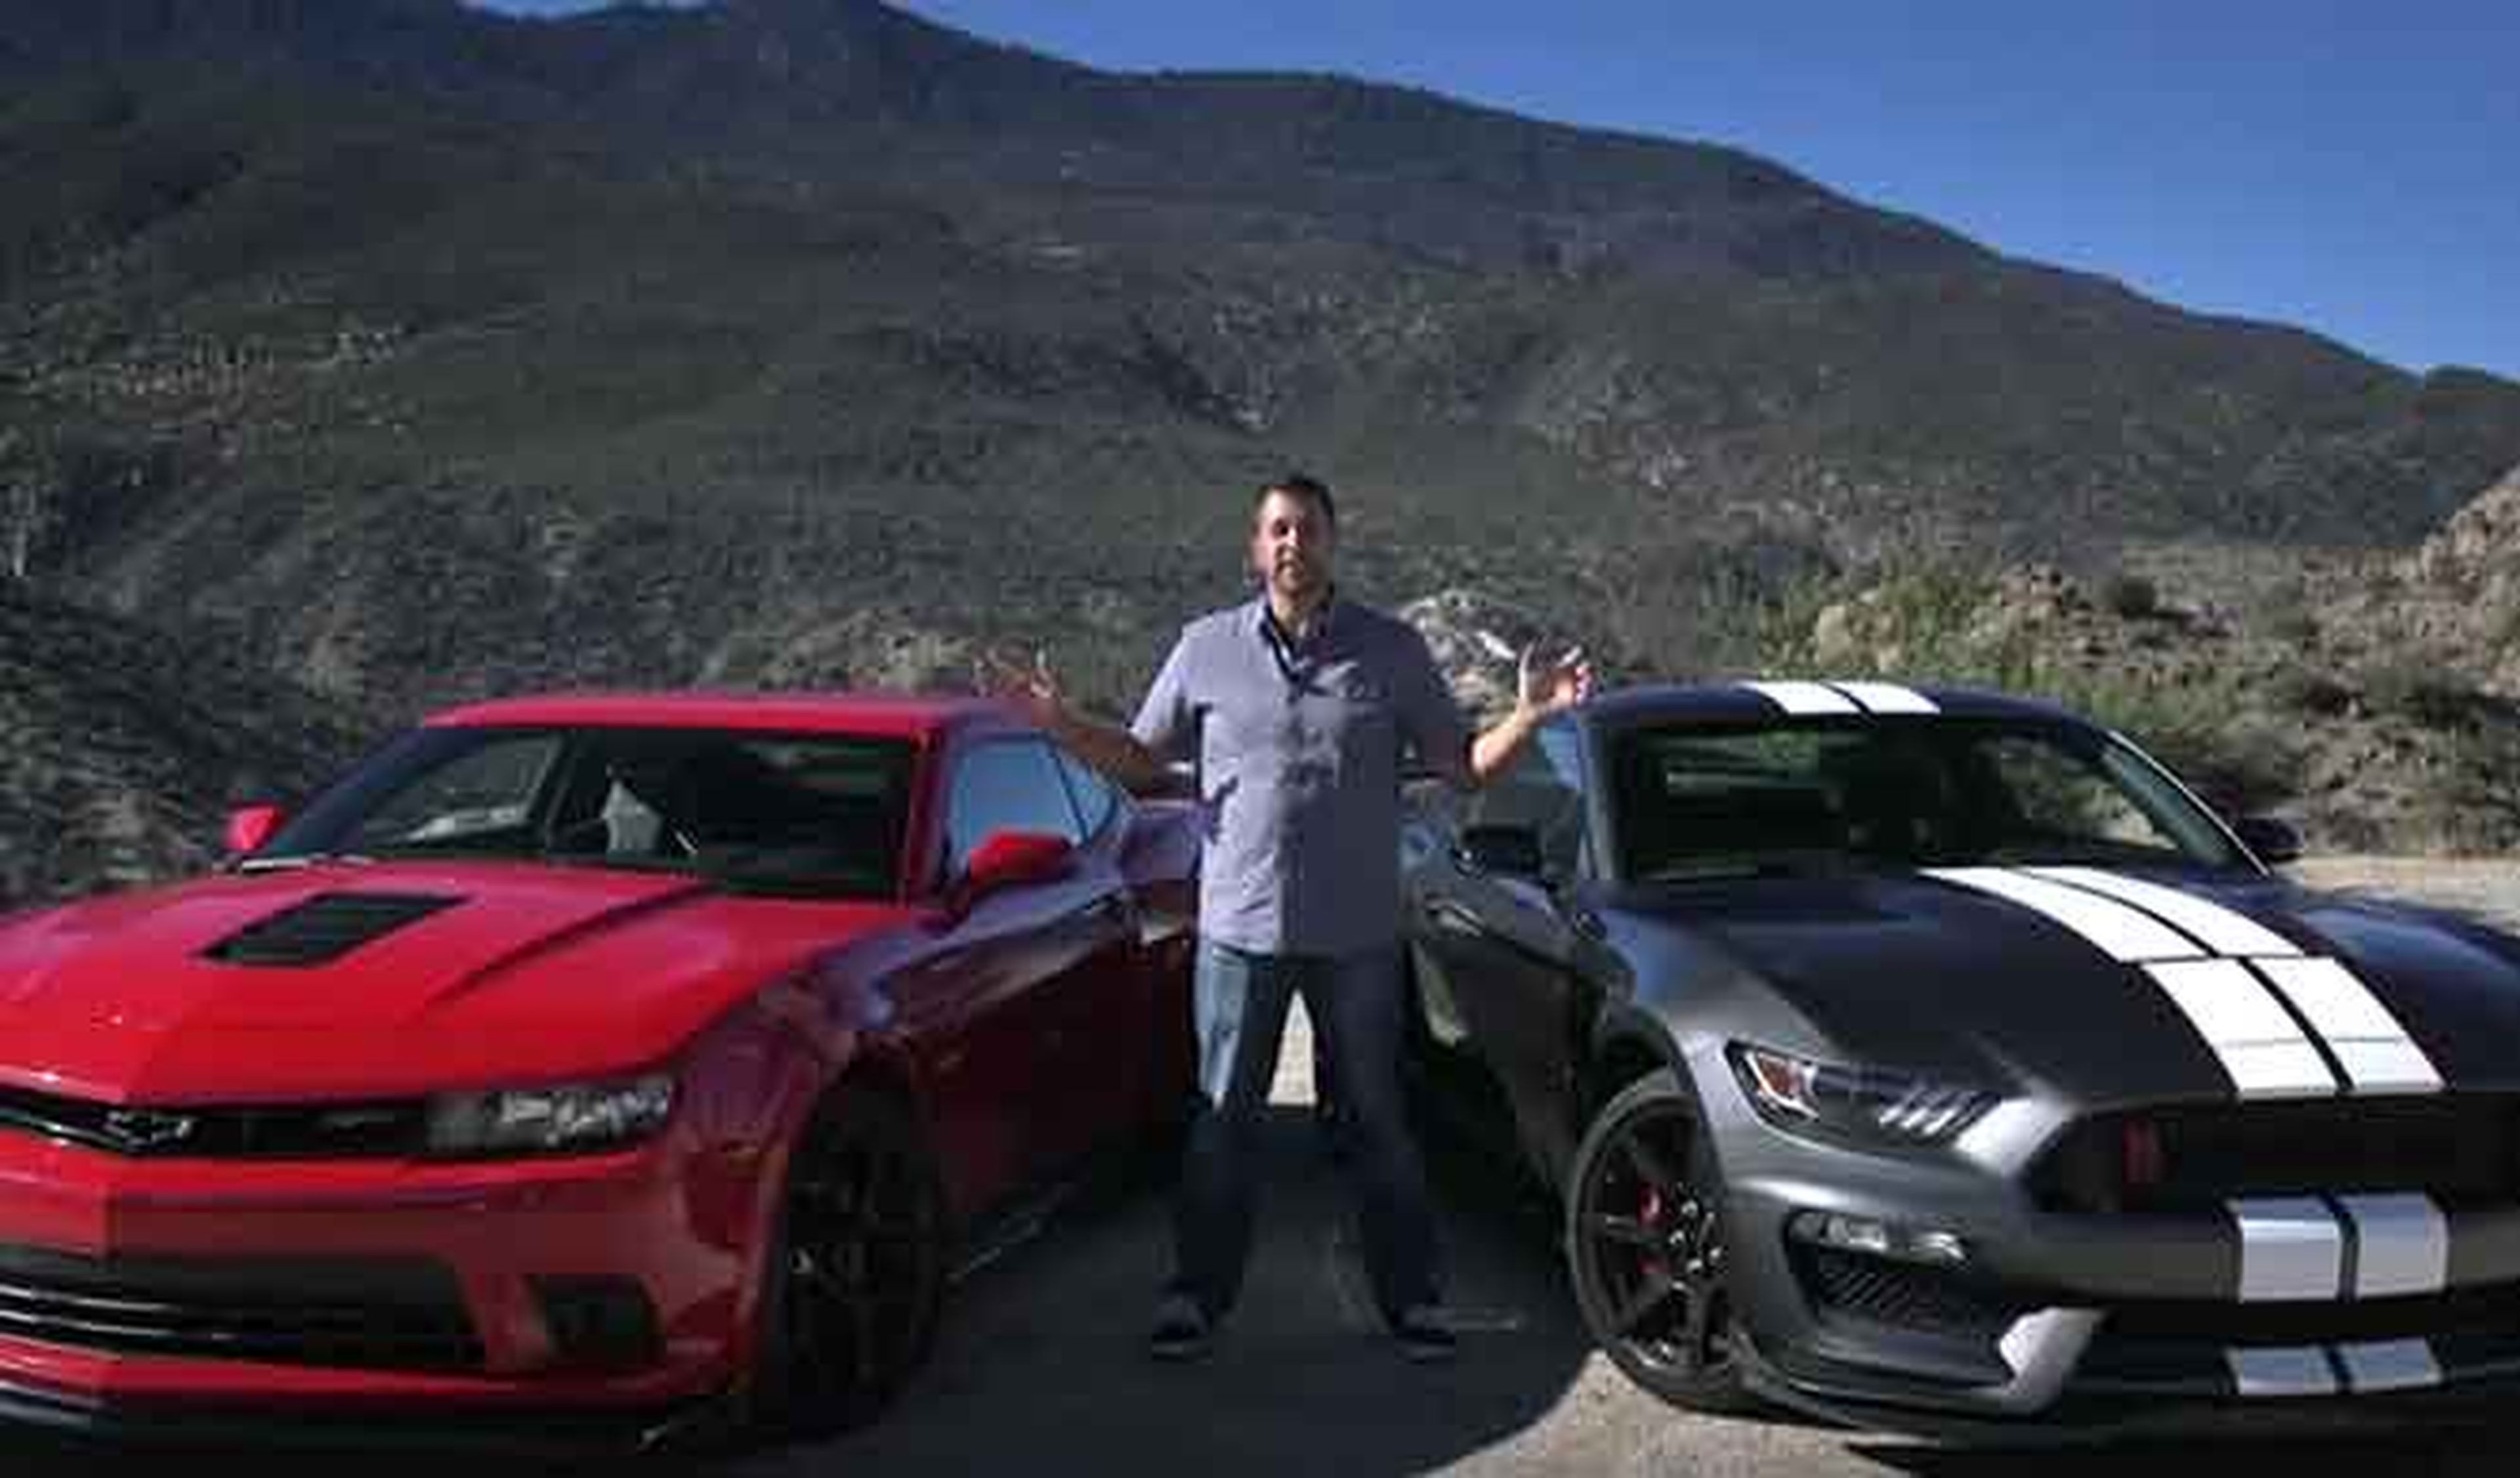 Batalla de muscle cars: Mustang vs Camaro